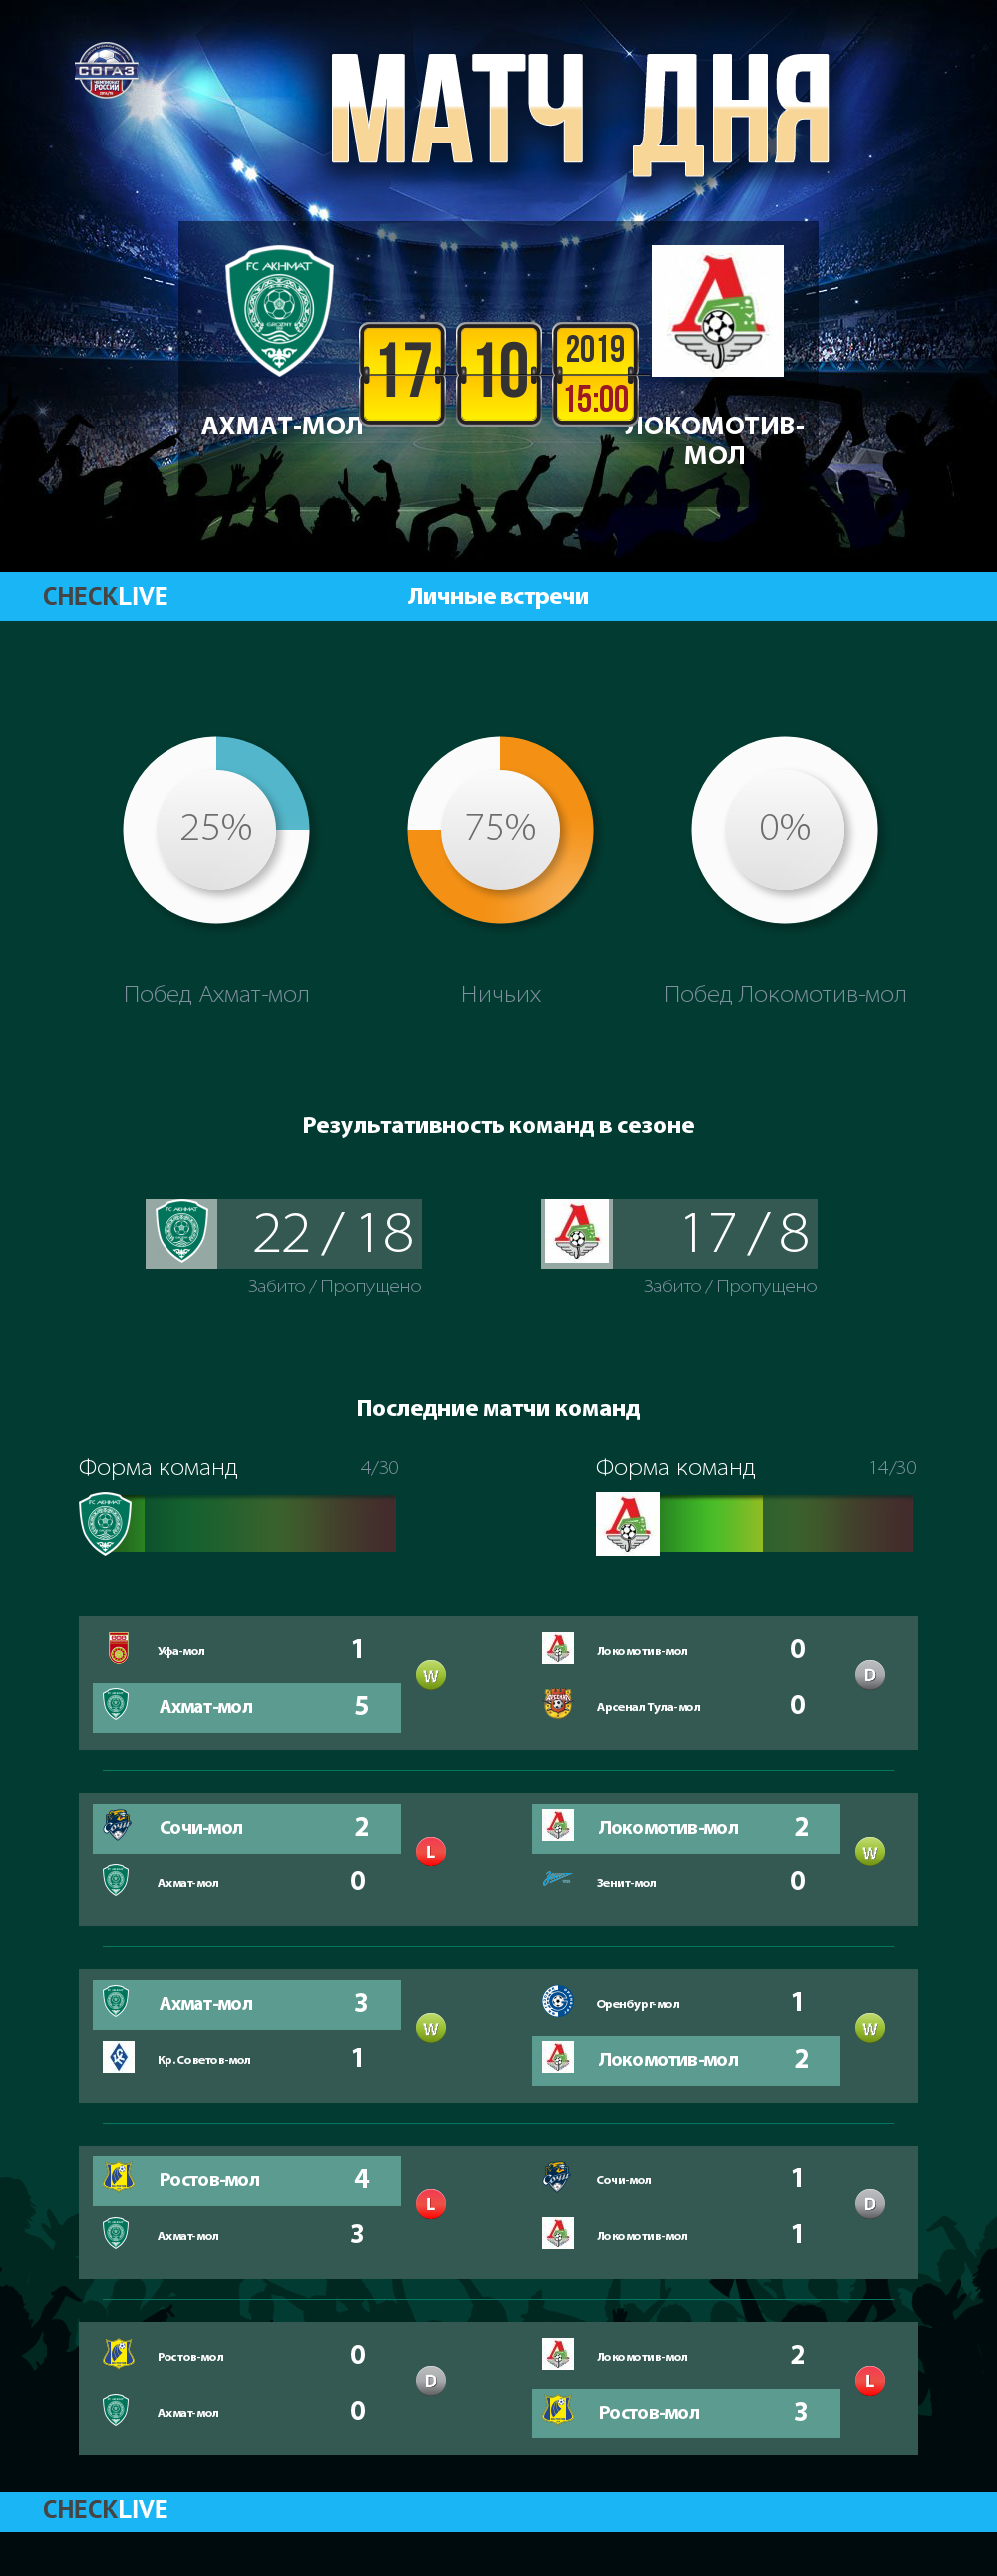 Инфографика Ахмат-мол и Локомотив-мол матч дня 17.10.2019